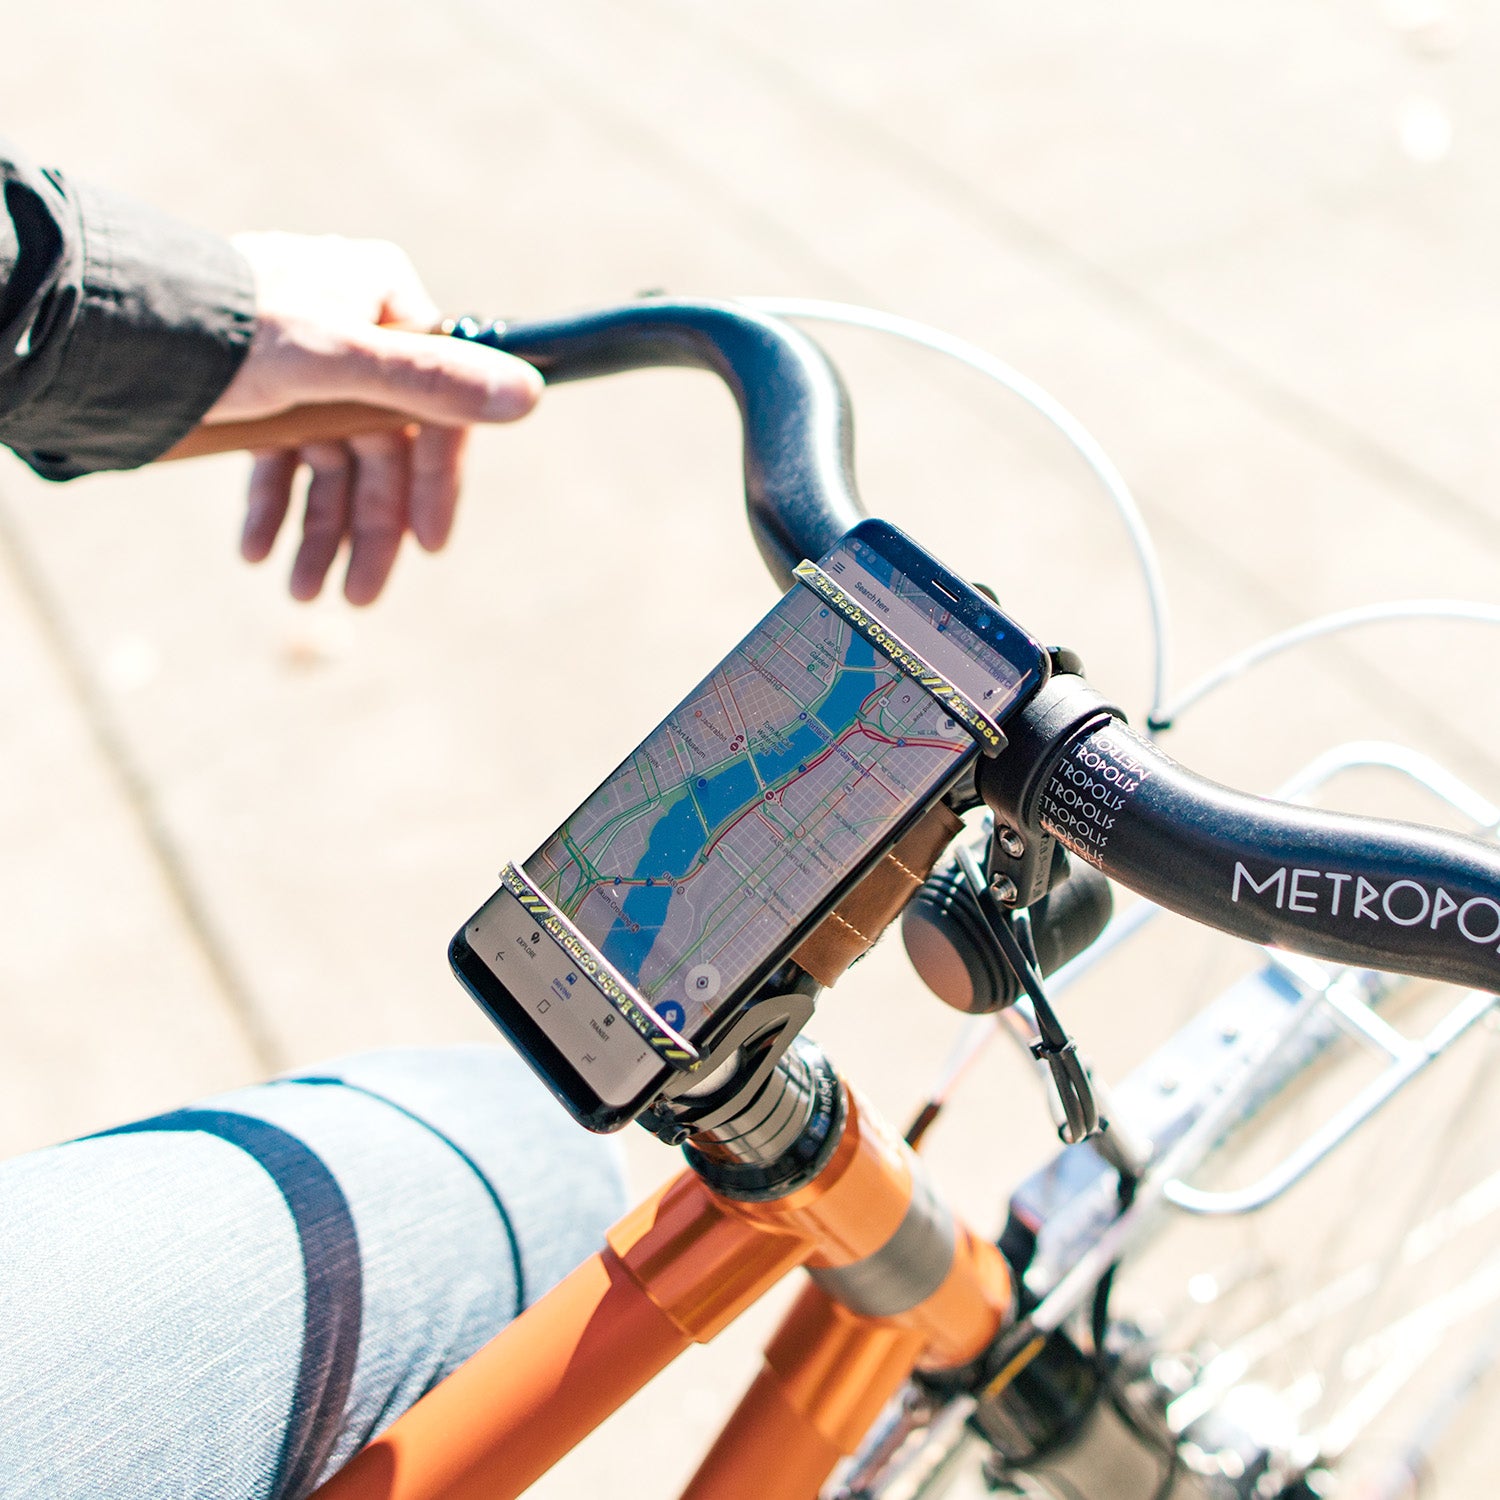 Bike / Peloton Handlebar or Frame Phone Holder Mount – The Beebe